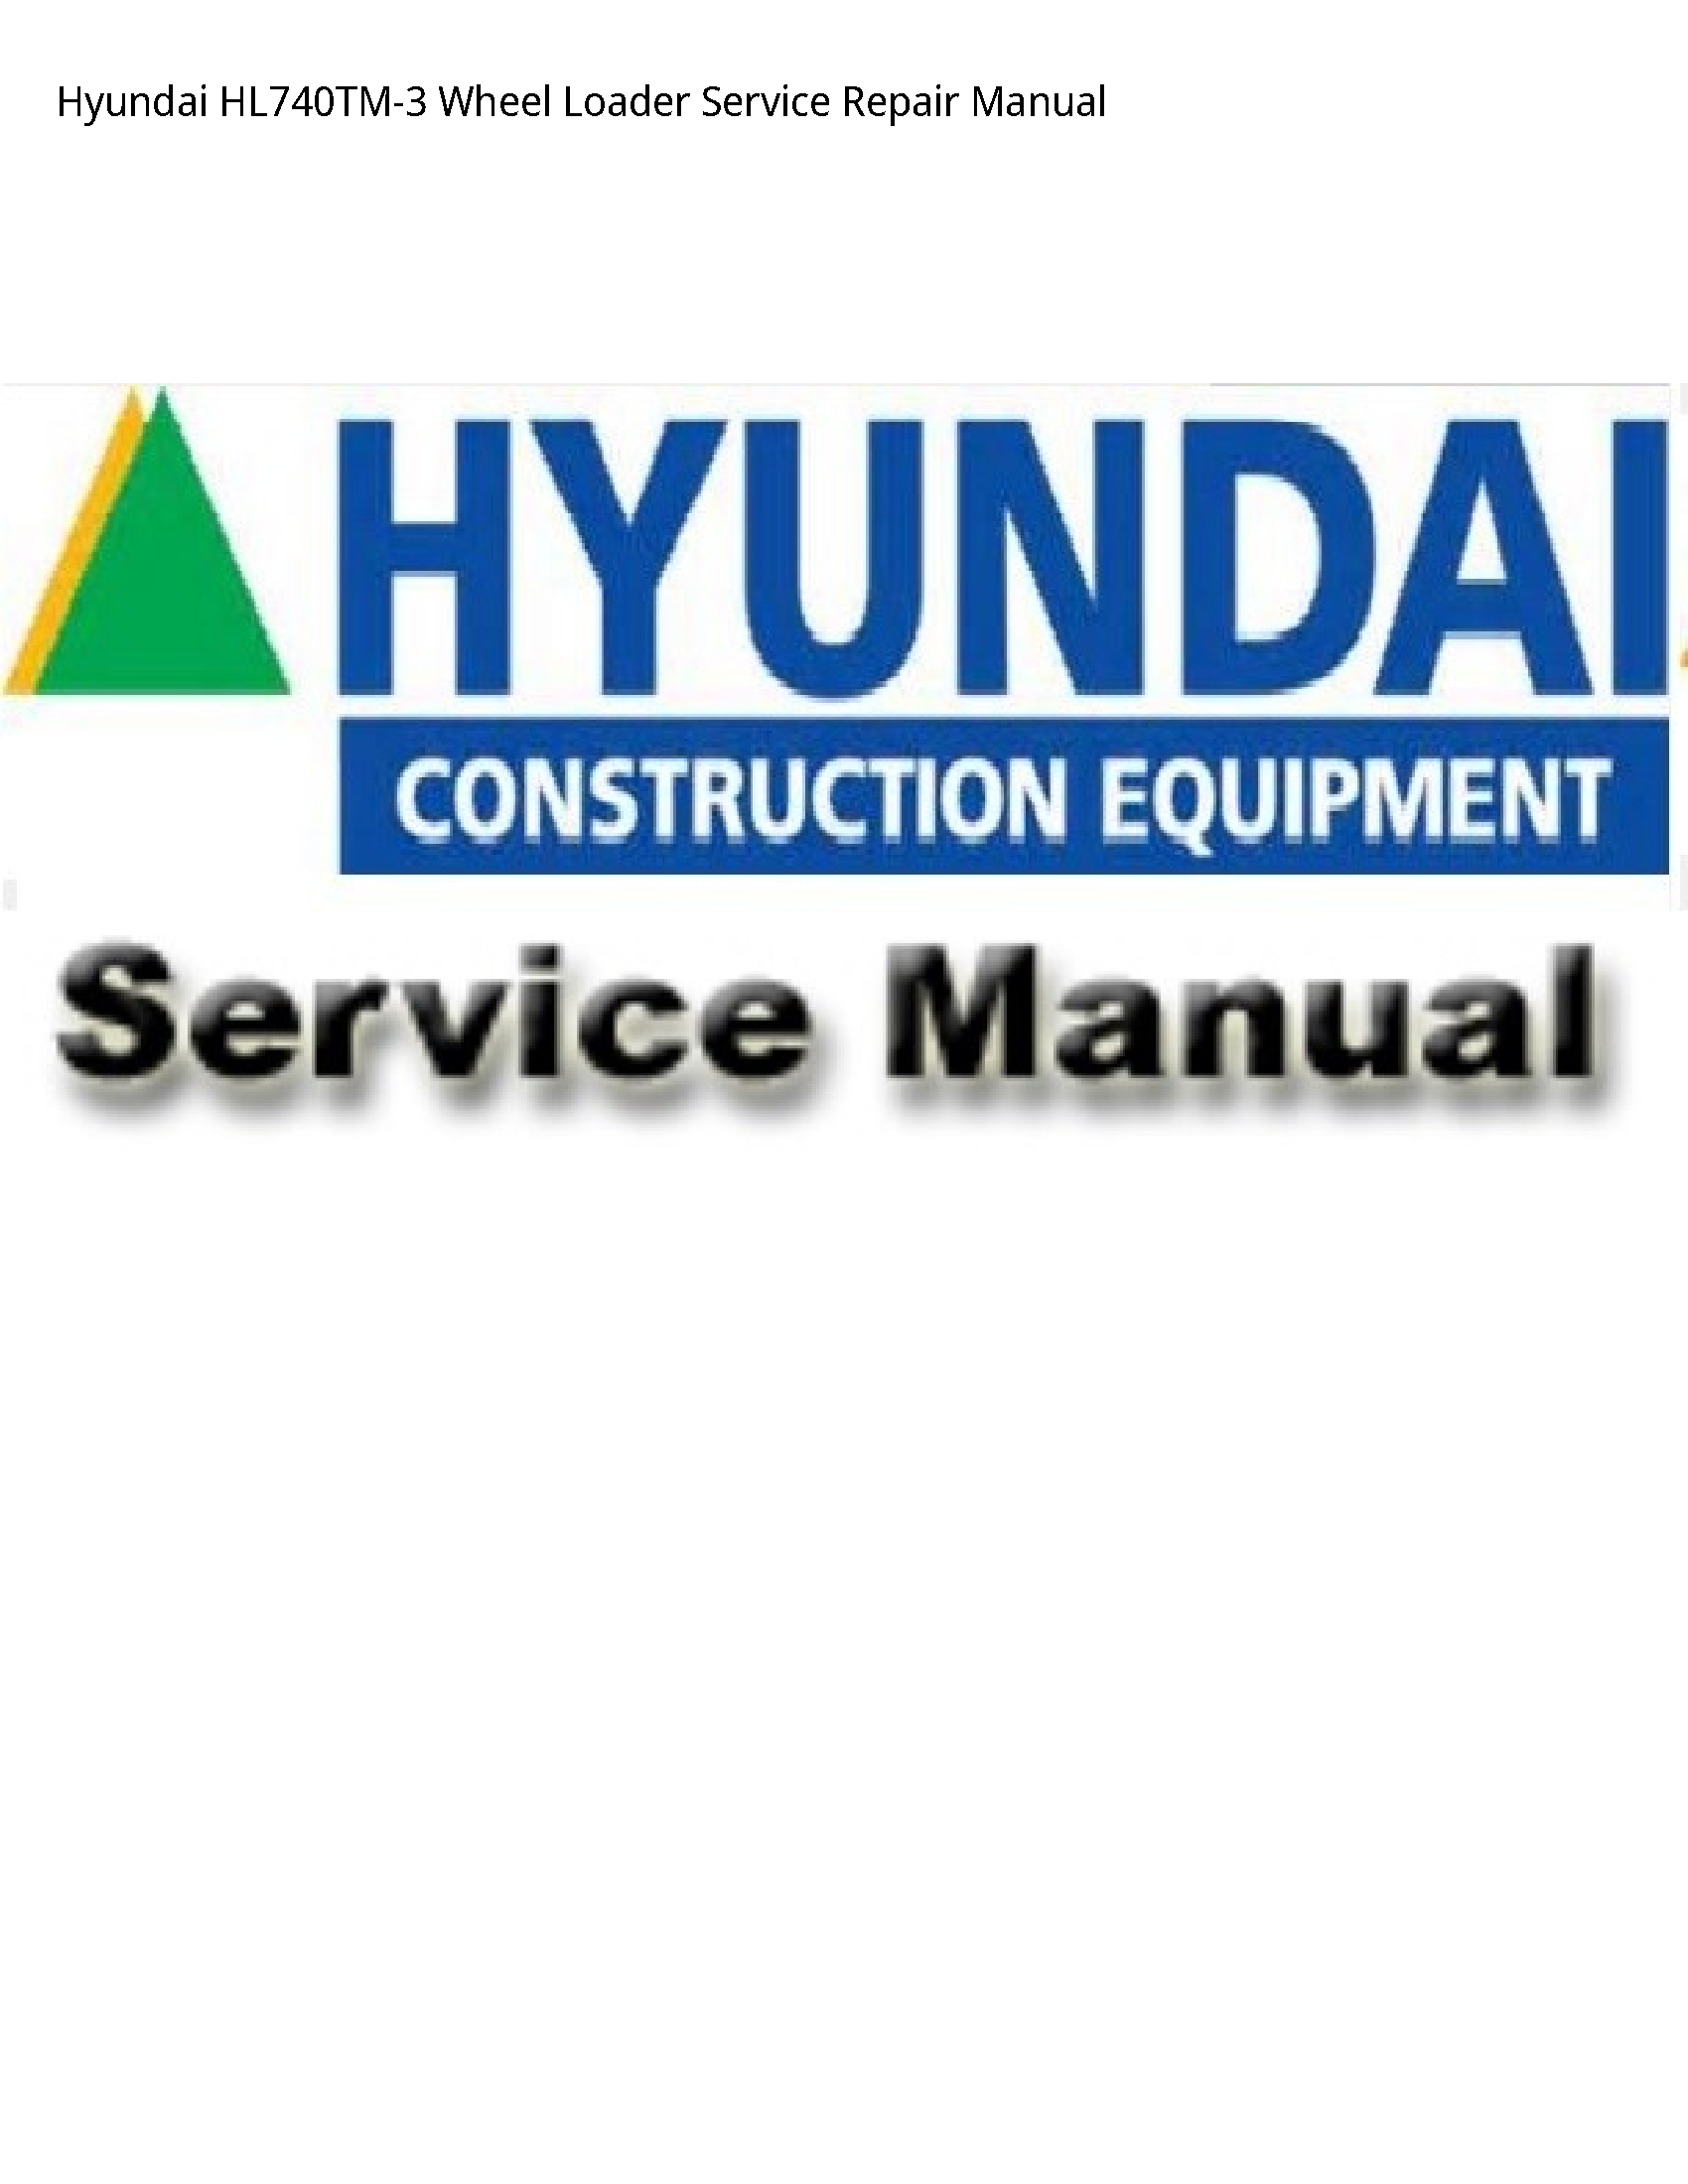 Hyundai HL740TM-3 Wheel Loader manual